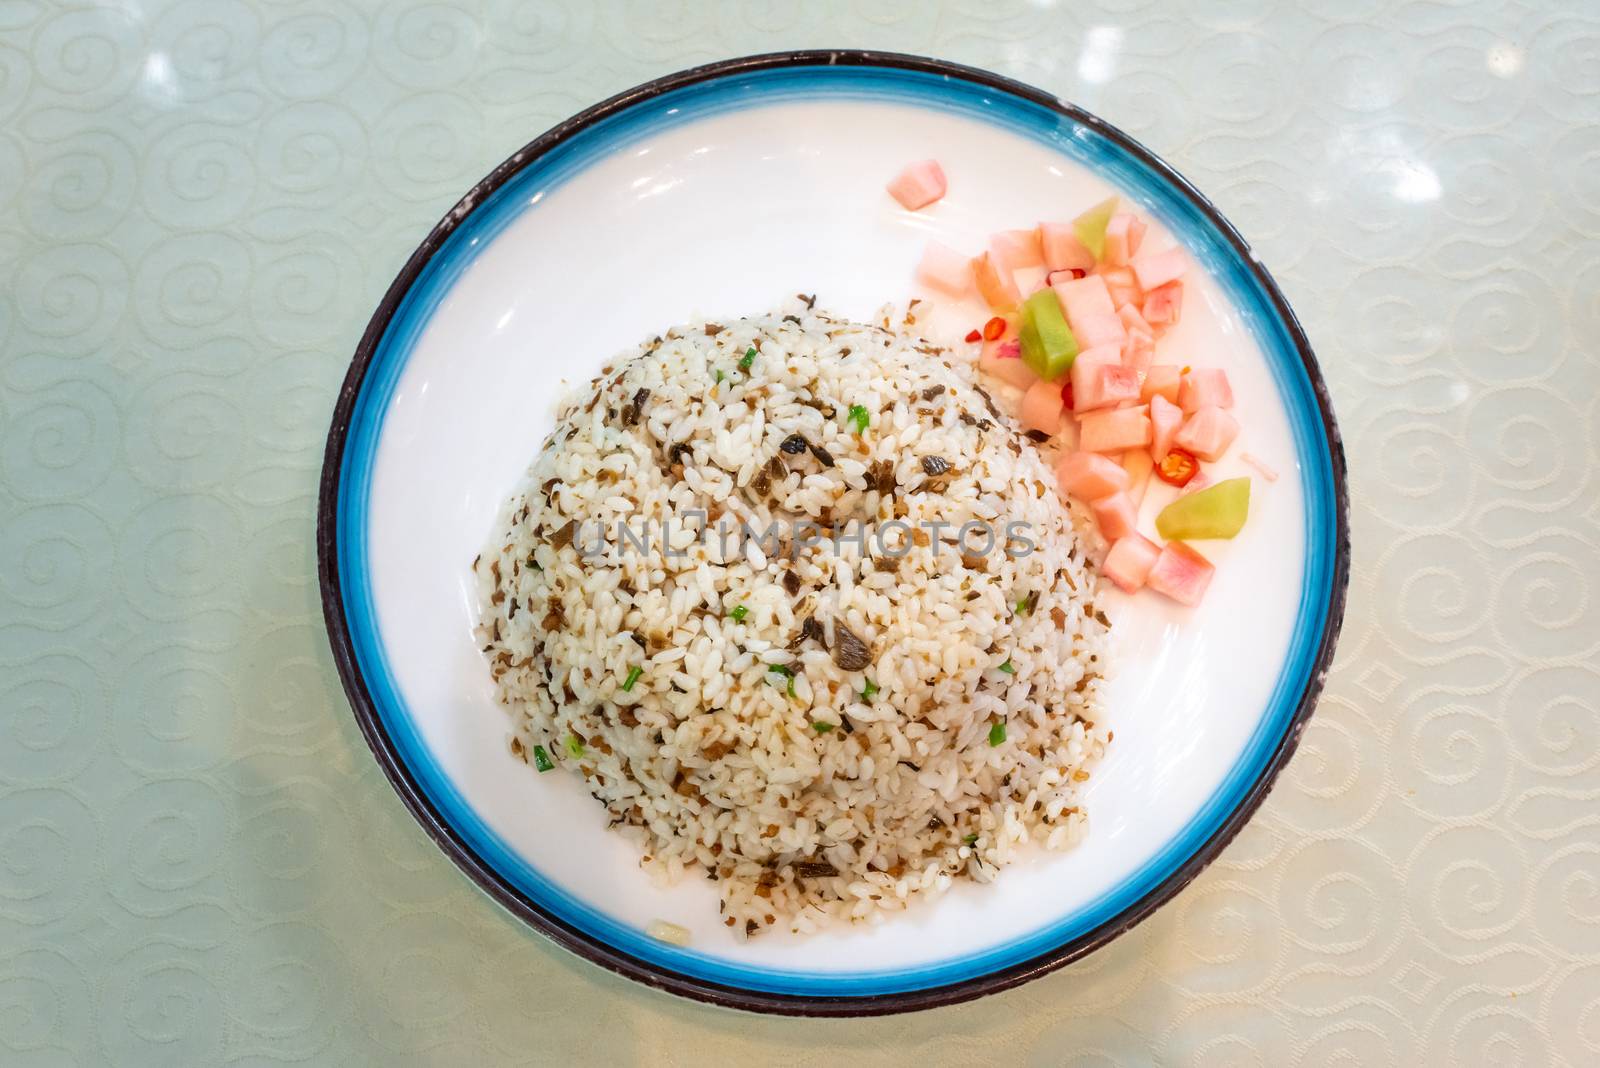 ChaoFan fried rice with radish by LP2Studio